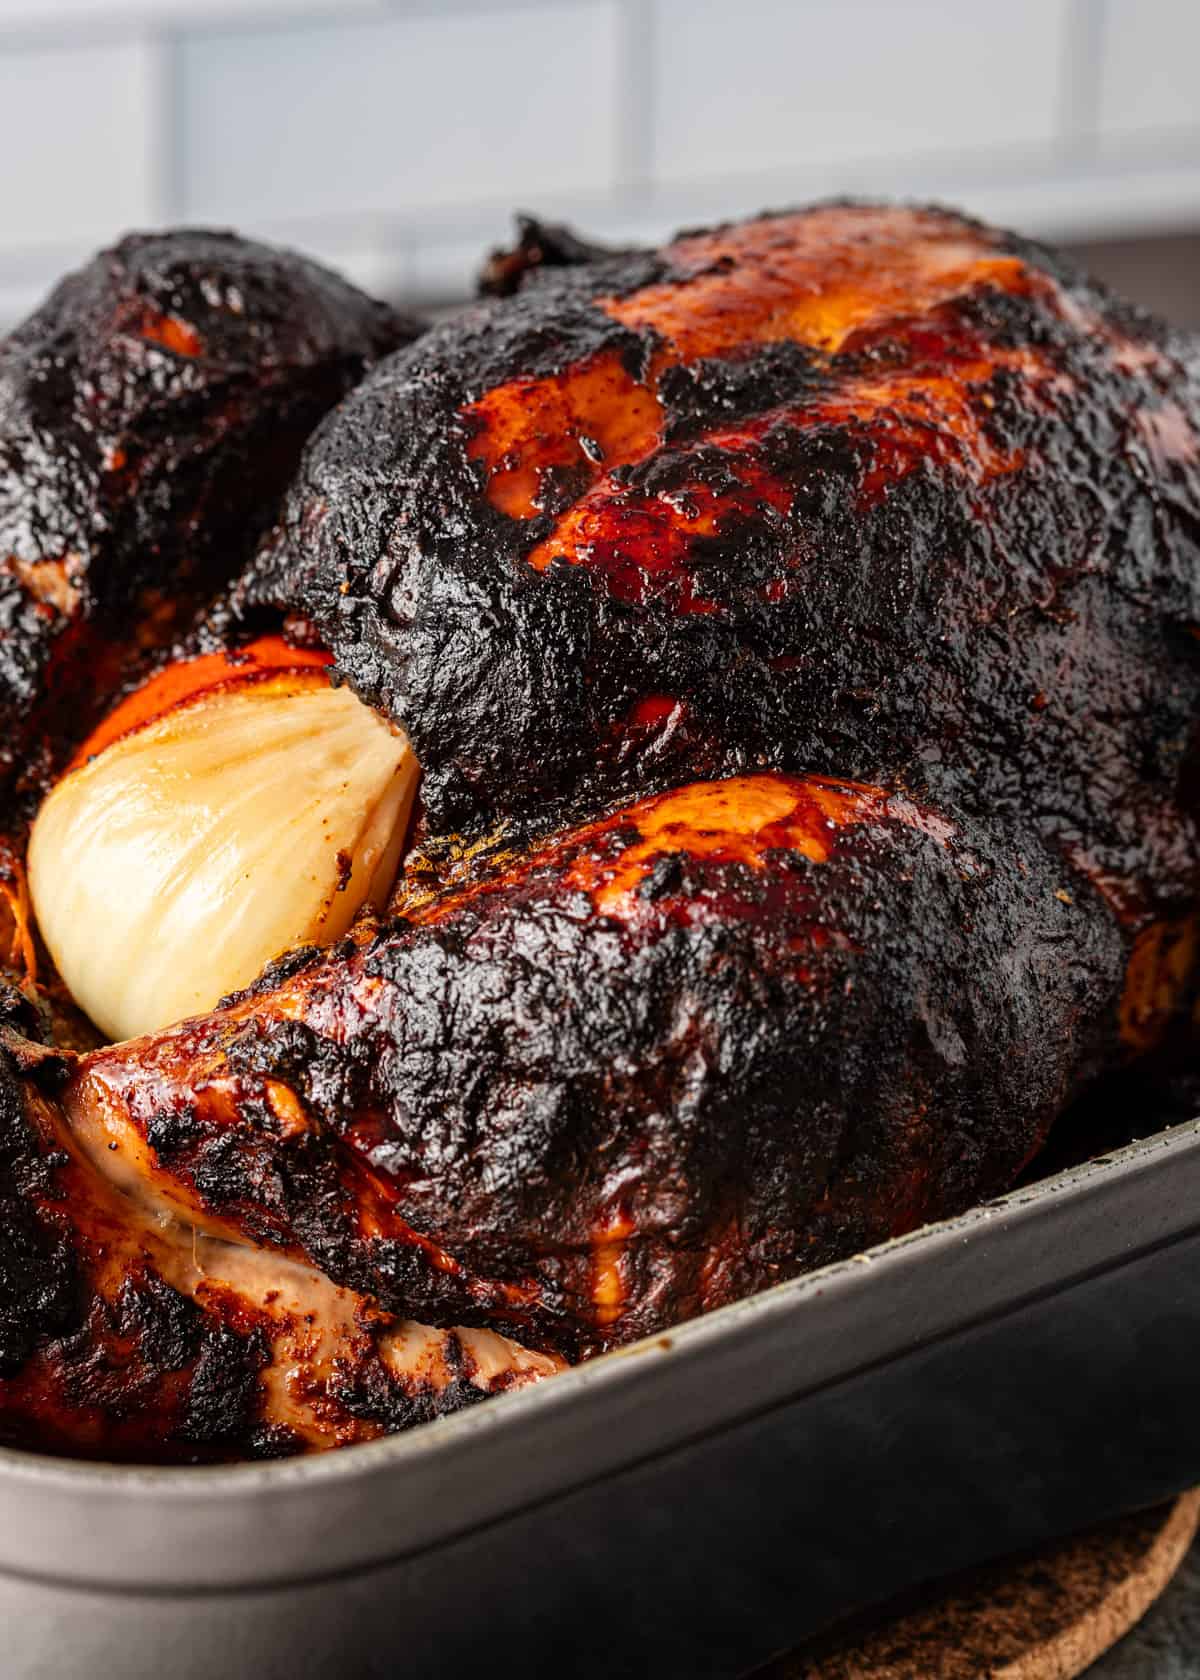 extreme closeup: roast turkey with extra crispy skin